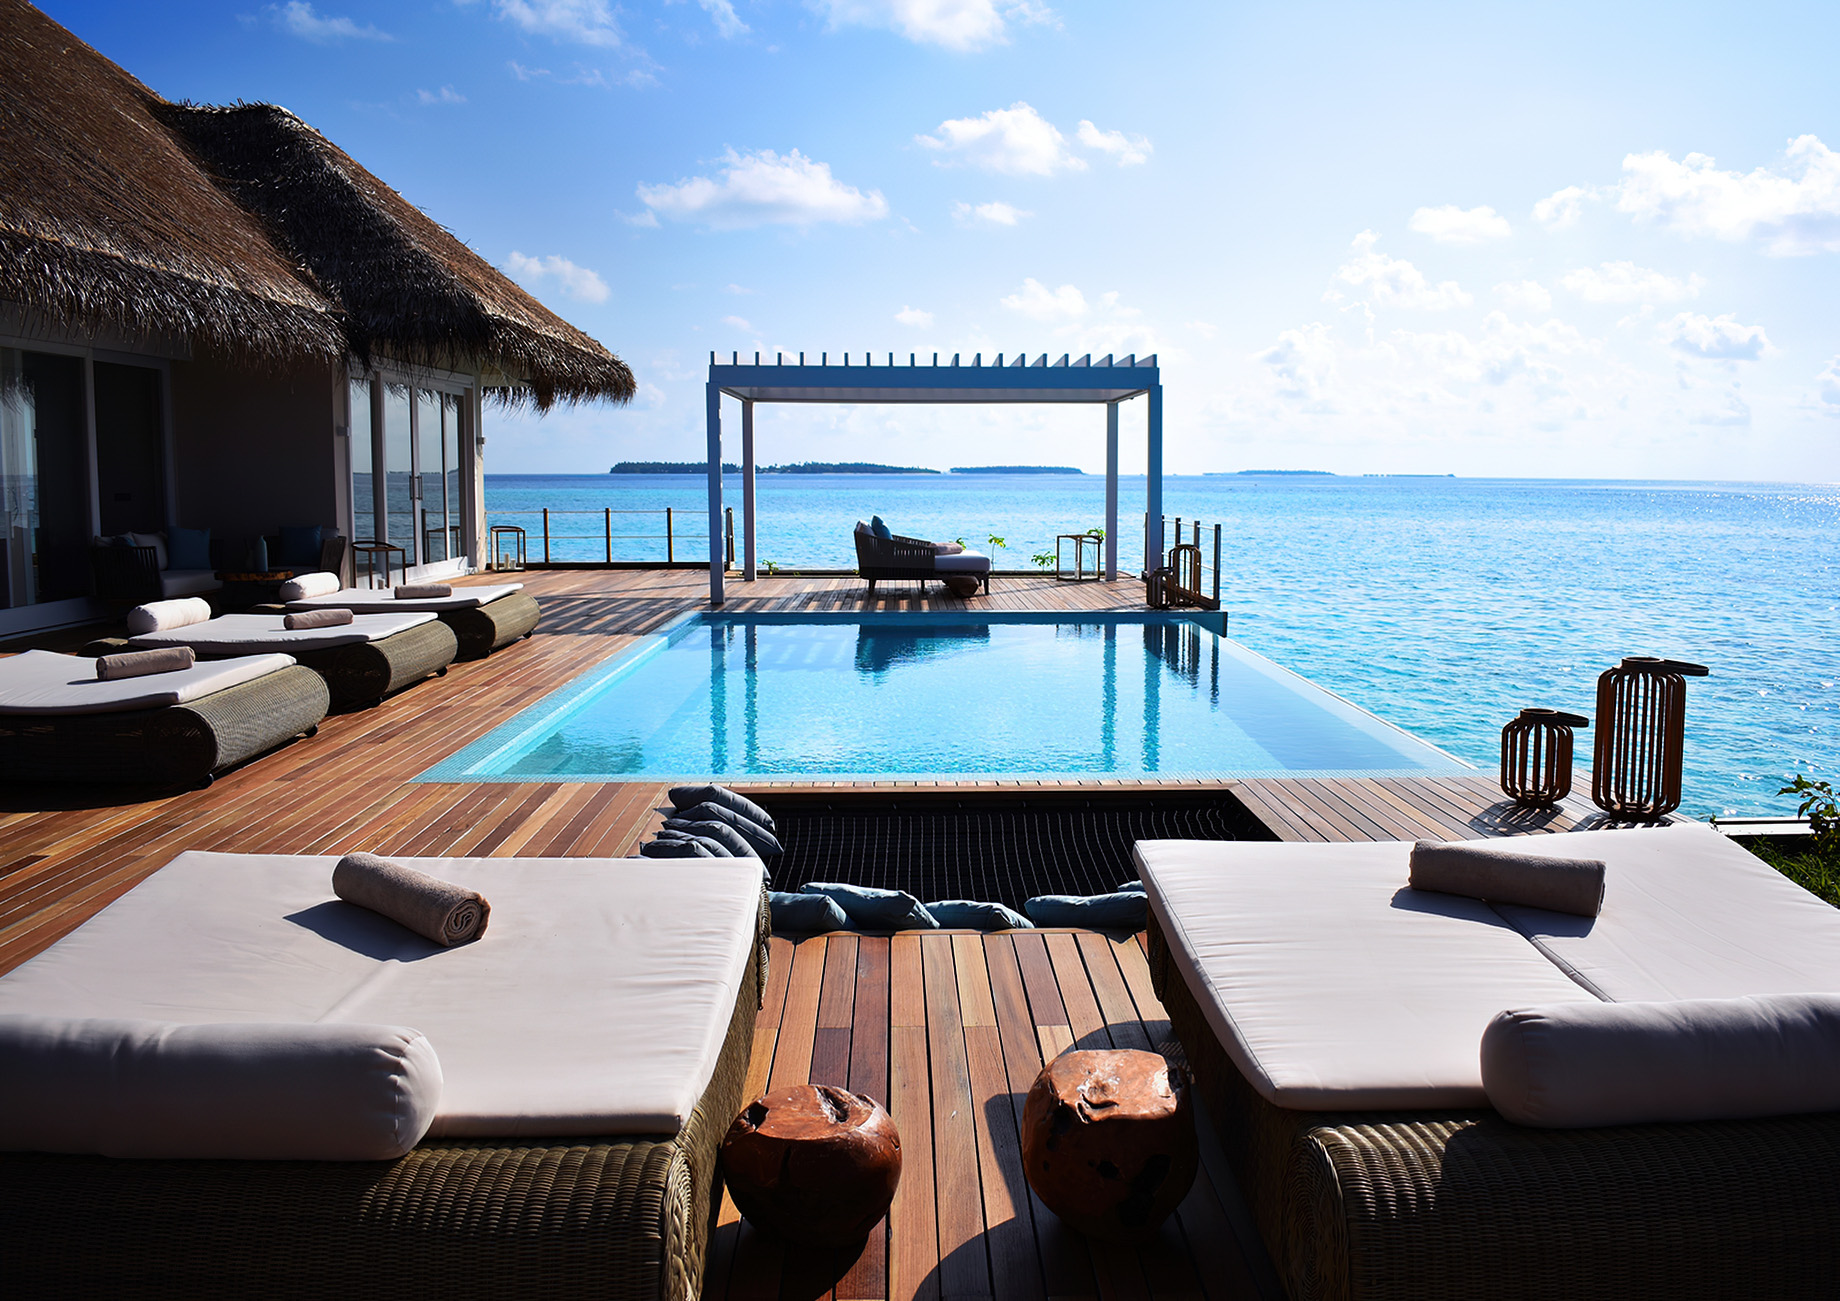 Baglioni Resort Maldives – Maagau Island, Rinbudhoo, Maldives – Presidential Water Villa Pool Deck